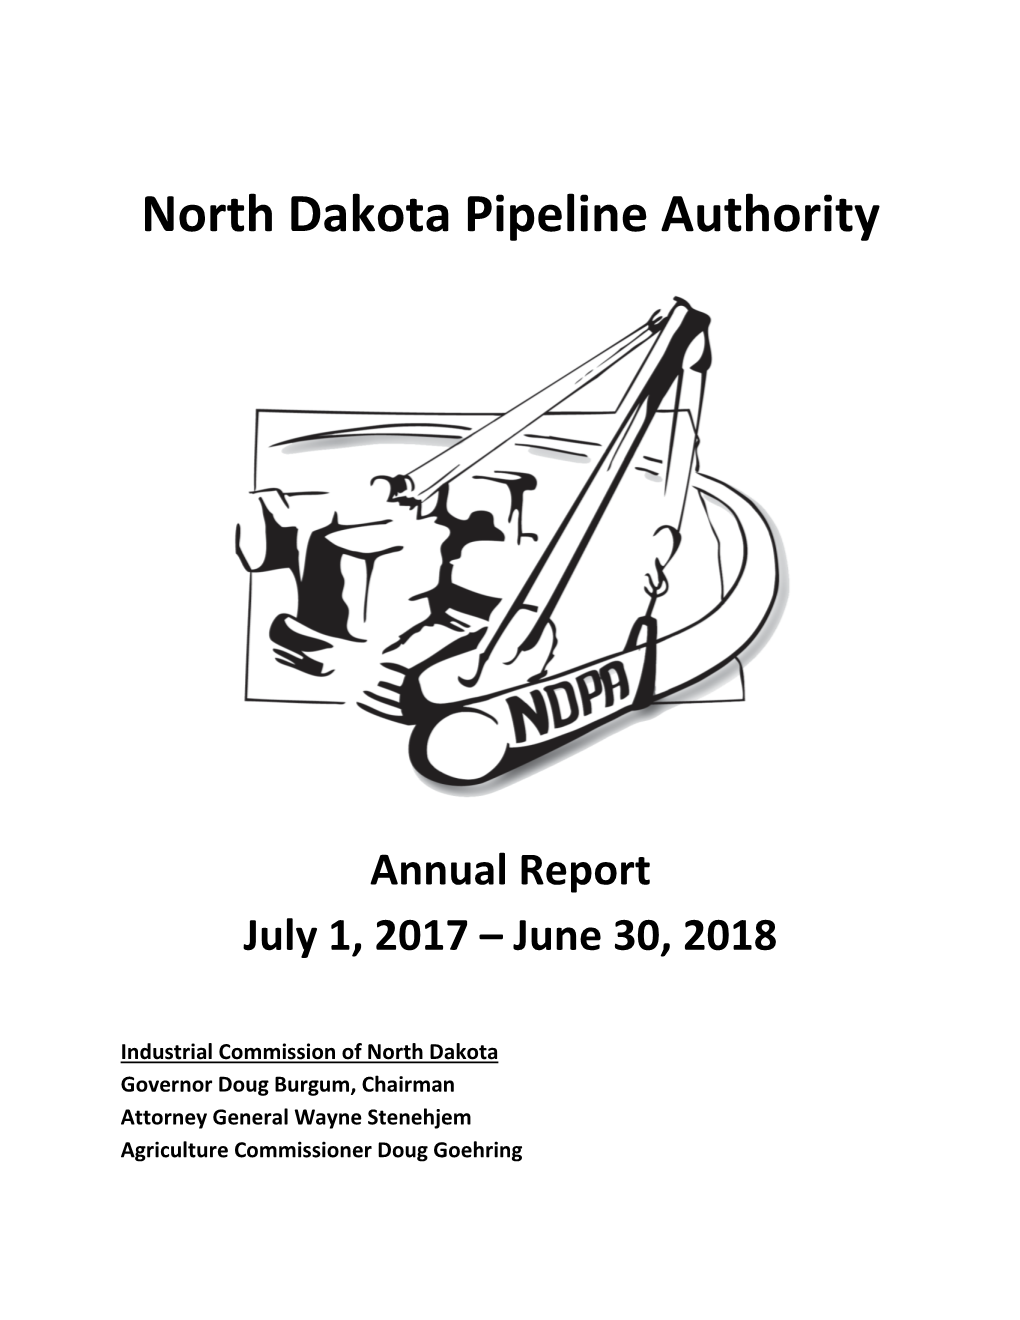 Pipeline Authority Annual Report 2018